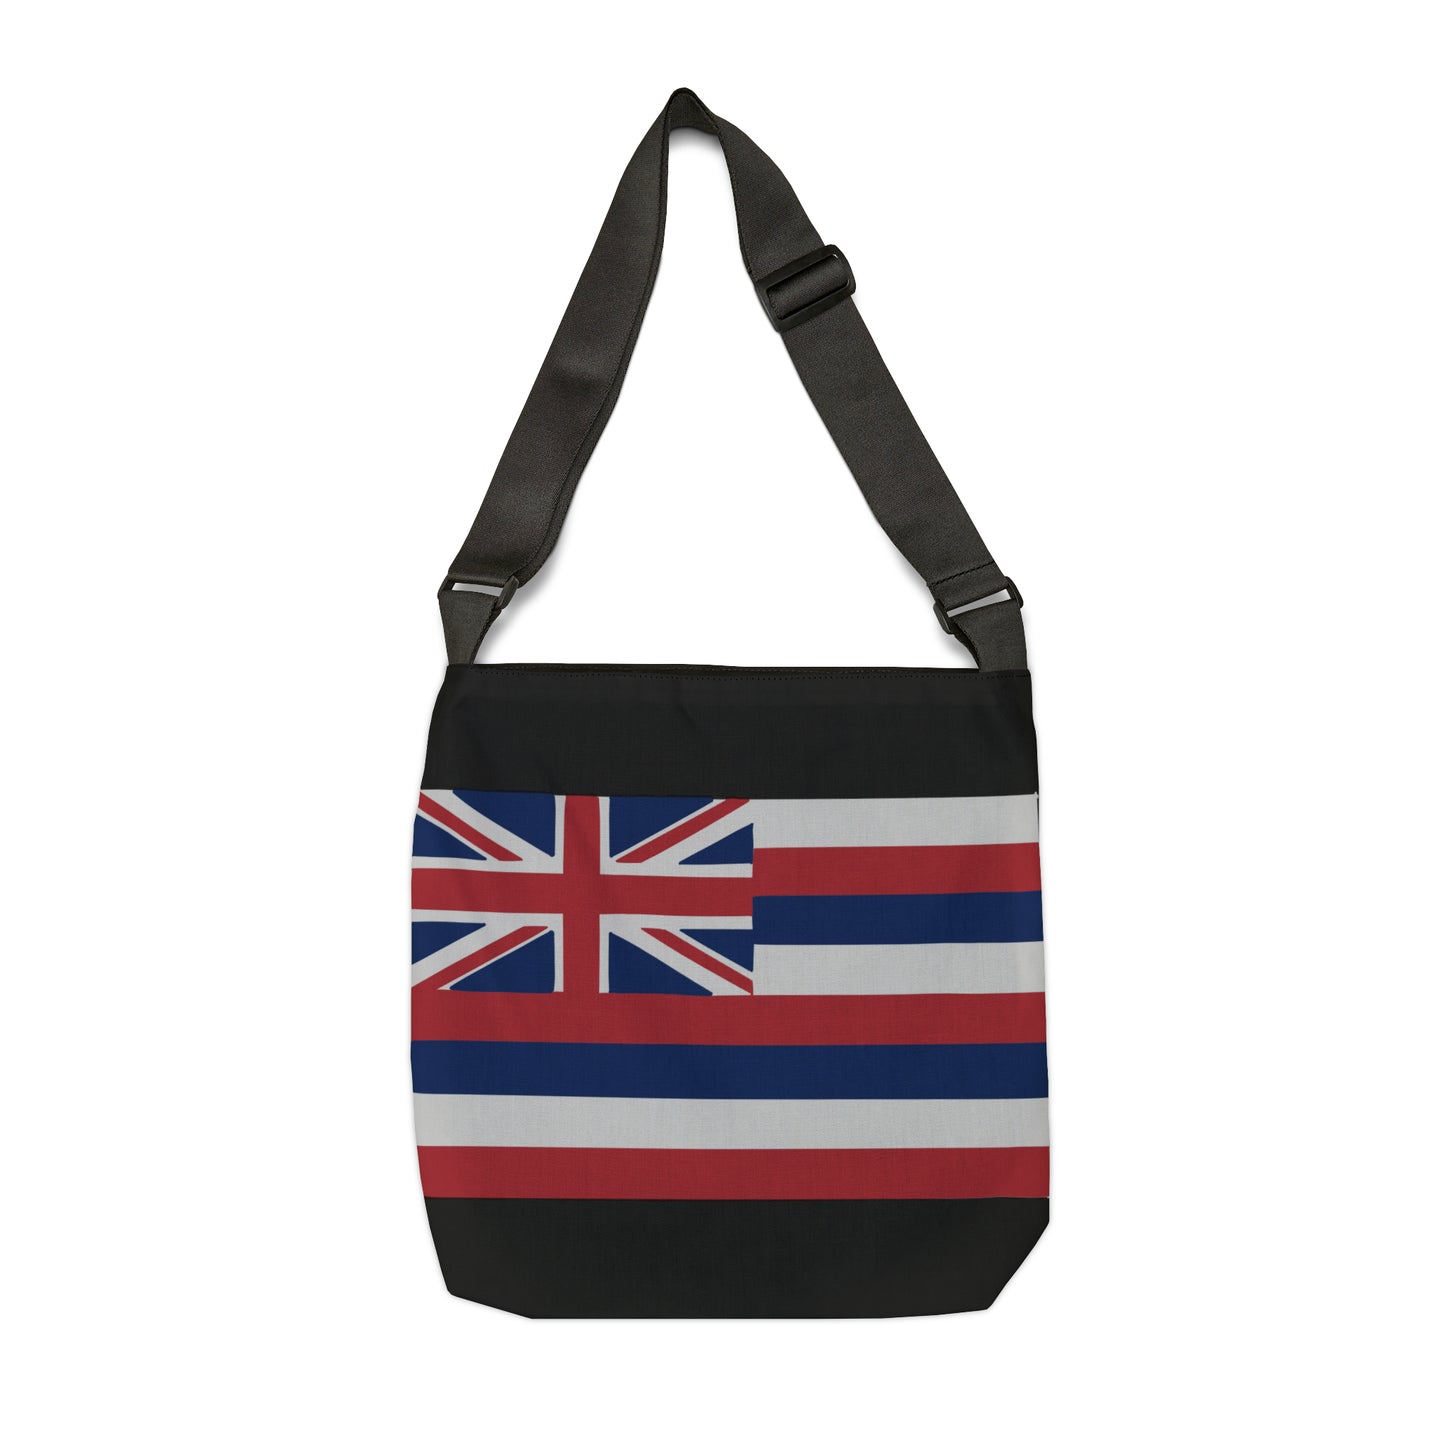 The Hakalama Black Adjustable Tote Bag